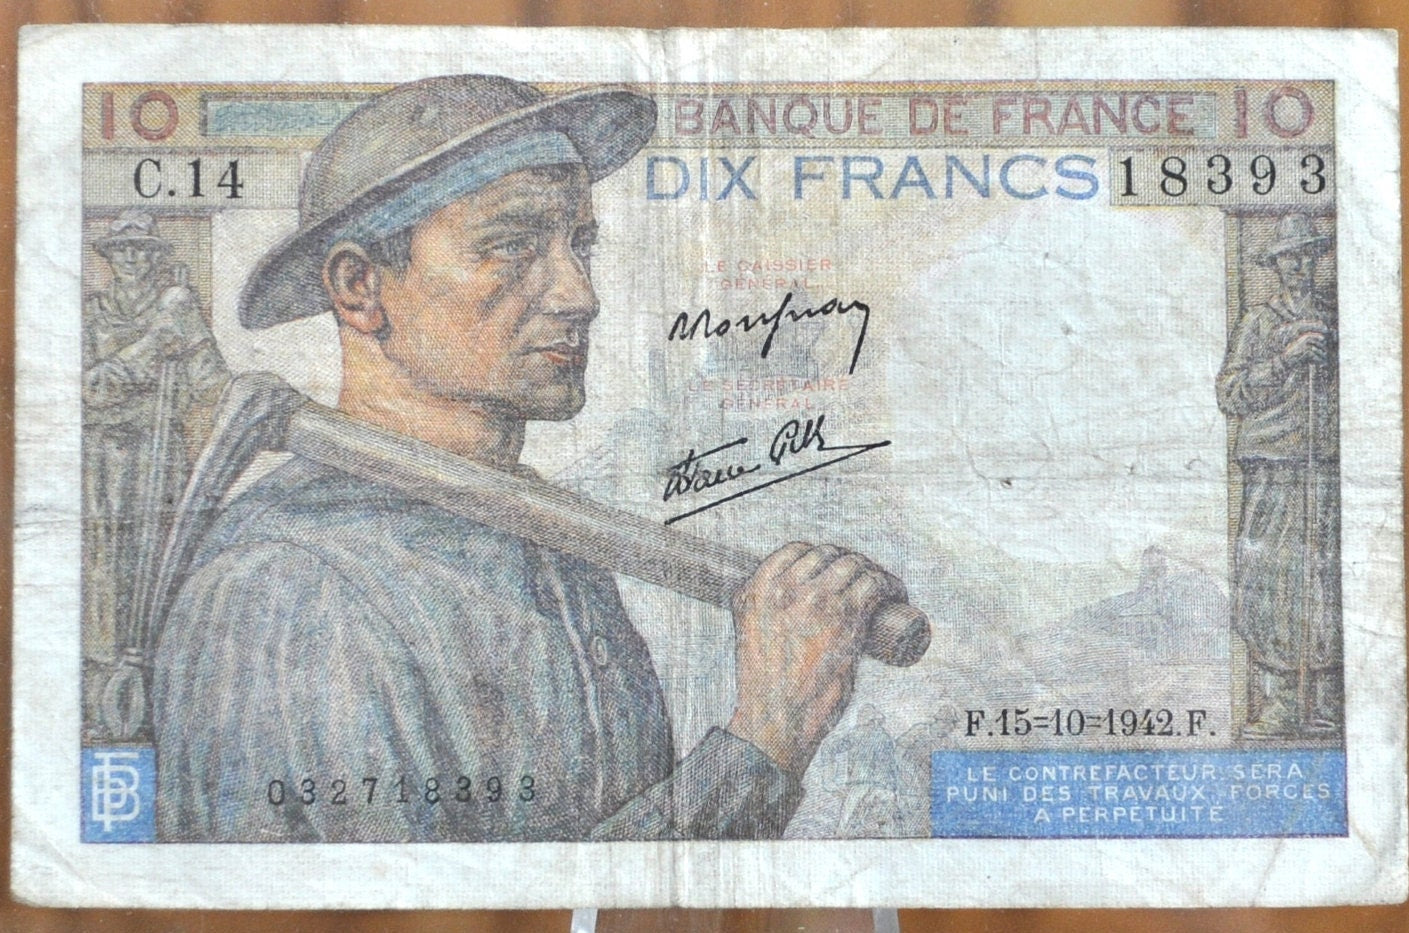 1942 France 10 Franc Banknote - Miner Type - Pick Number 99d (P#99d) - French Ten Francs Banknote 1942 15-10-1942